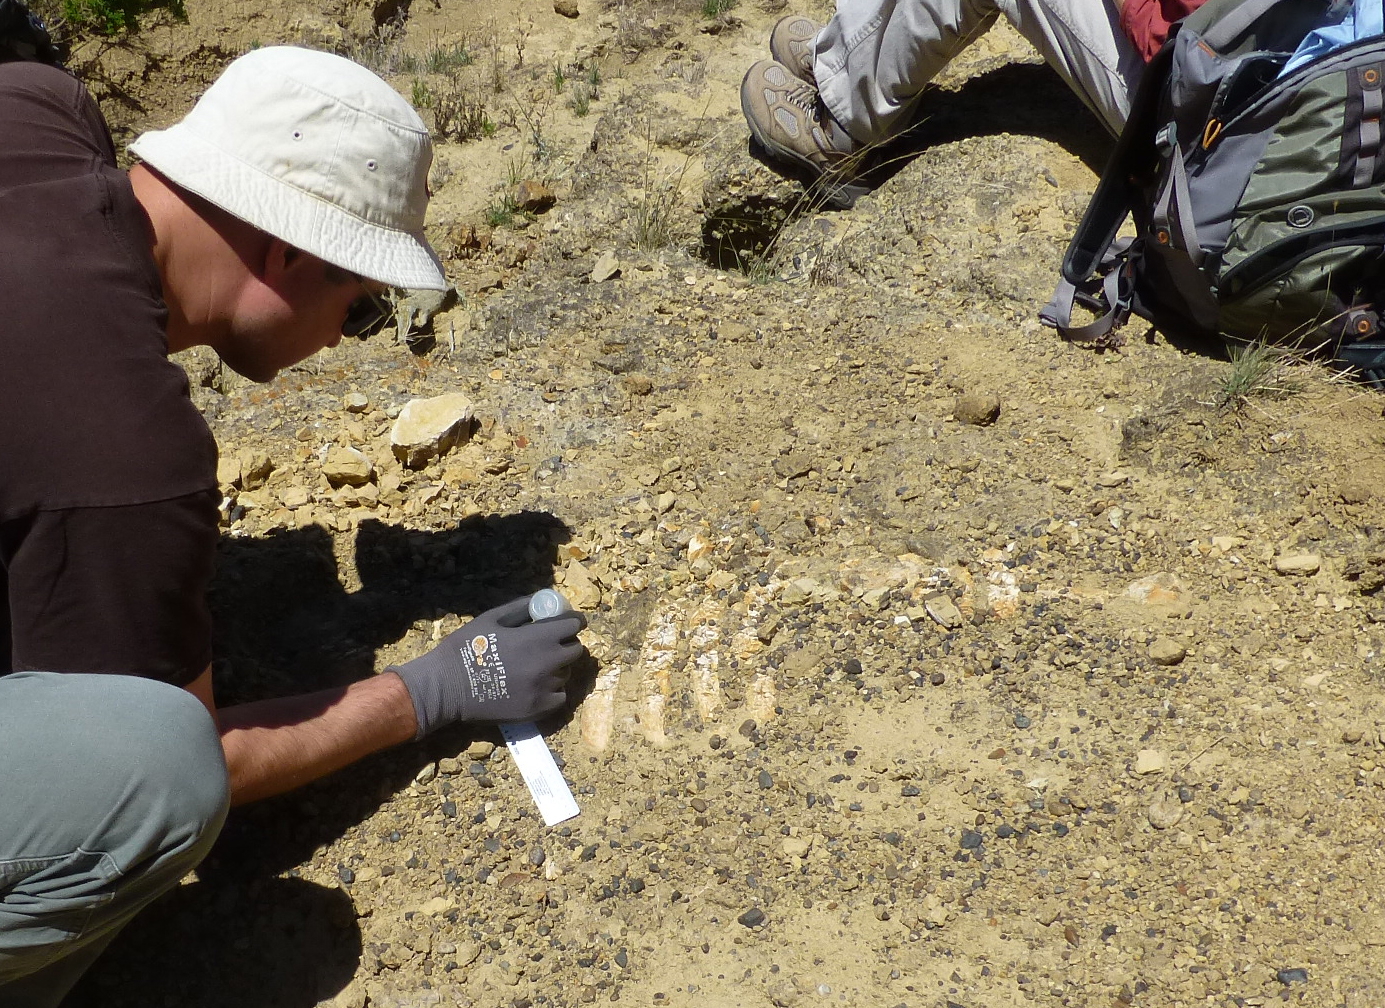 Scientist excavating fossil in dirt.